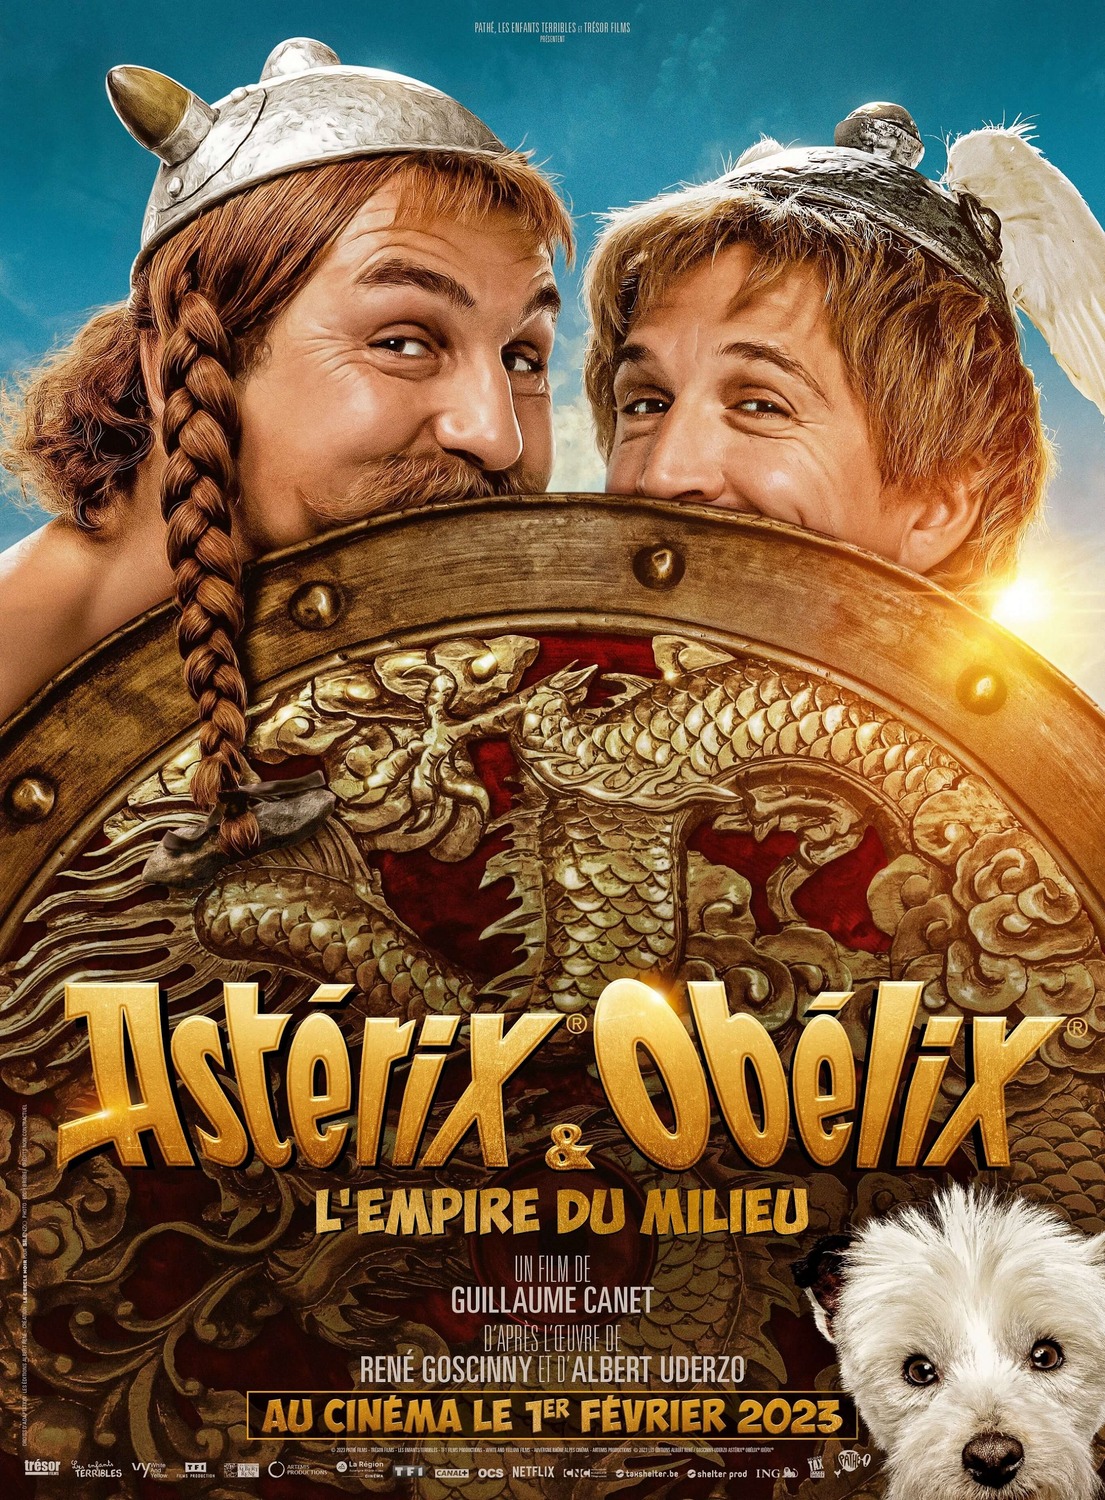 Extra Large Movie Poster Image for Astérix & Obélix: L'Empire du Milieu (#1 of 36)